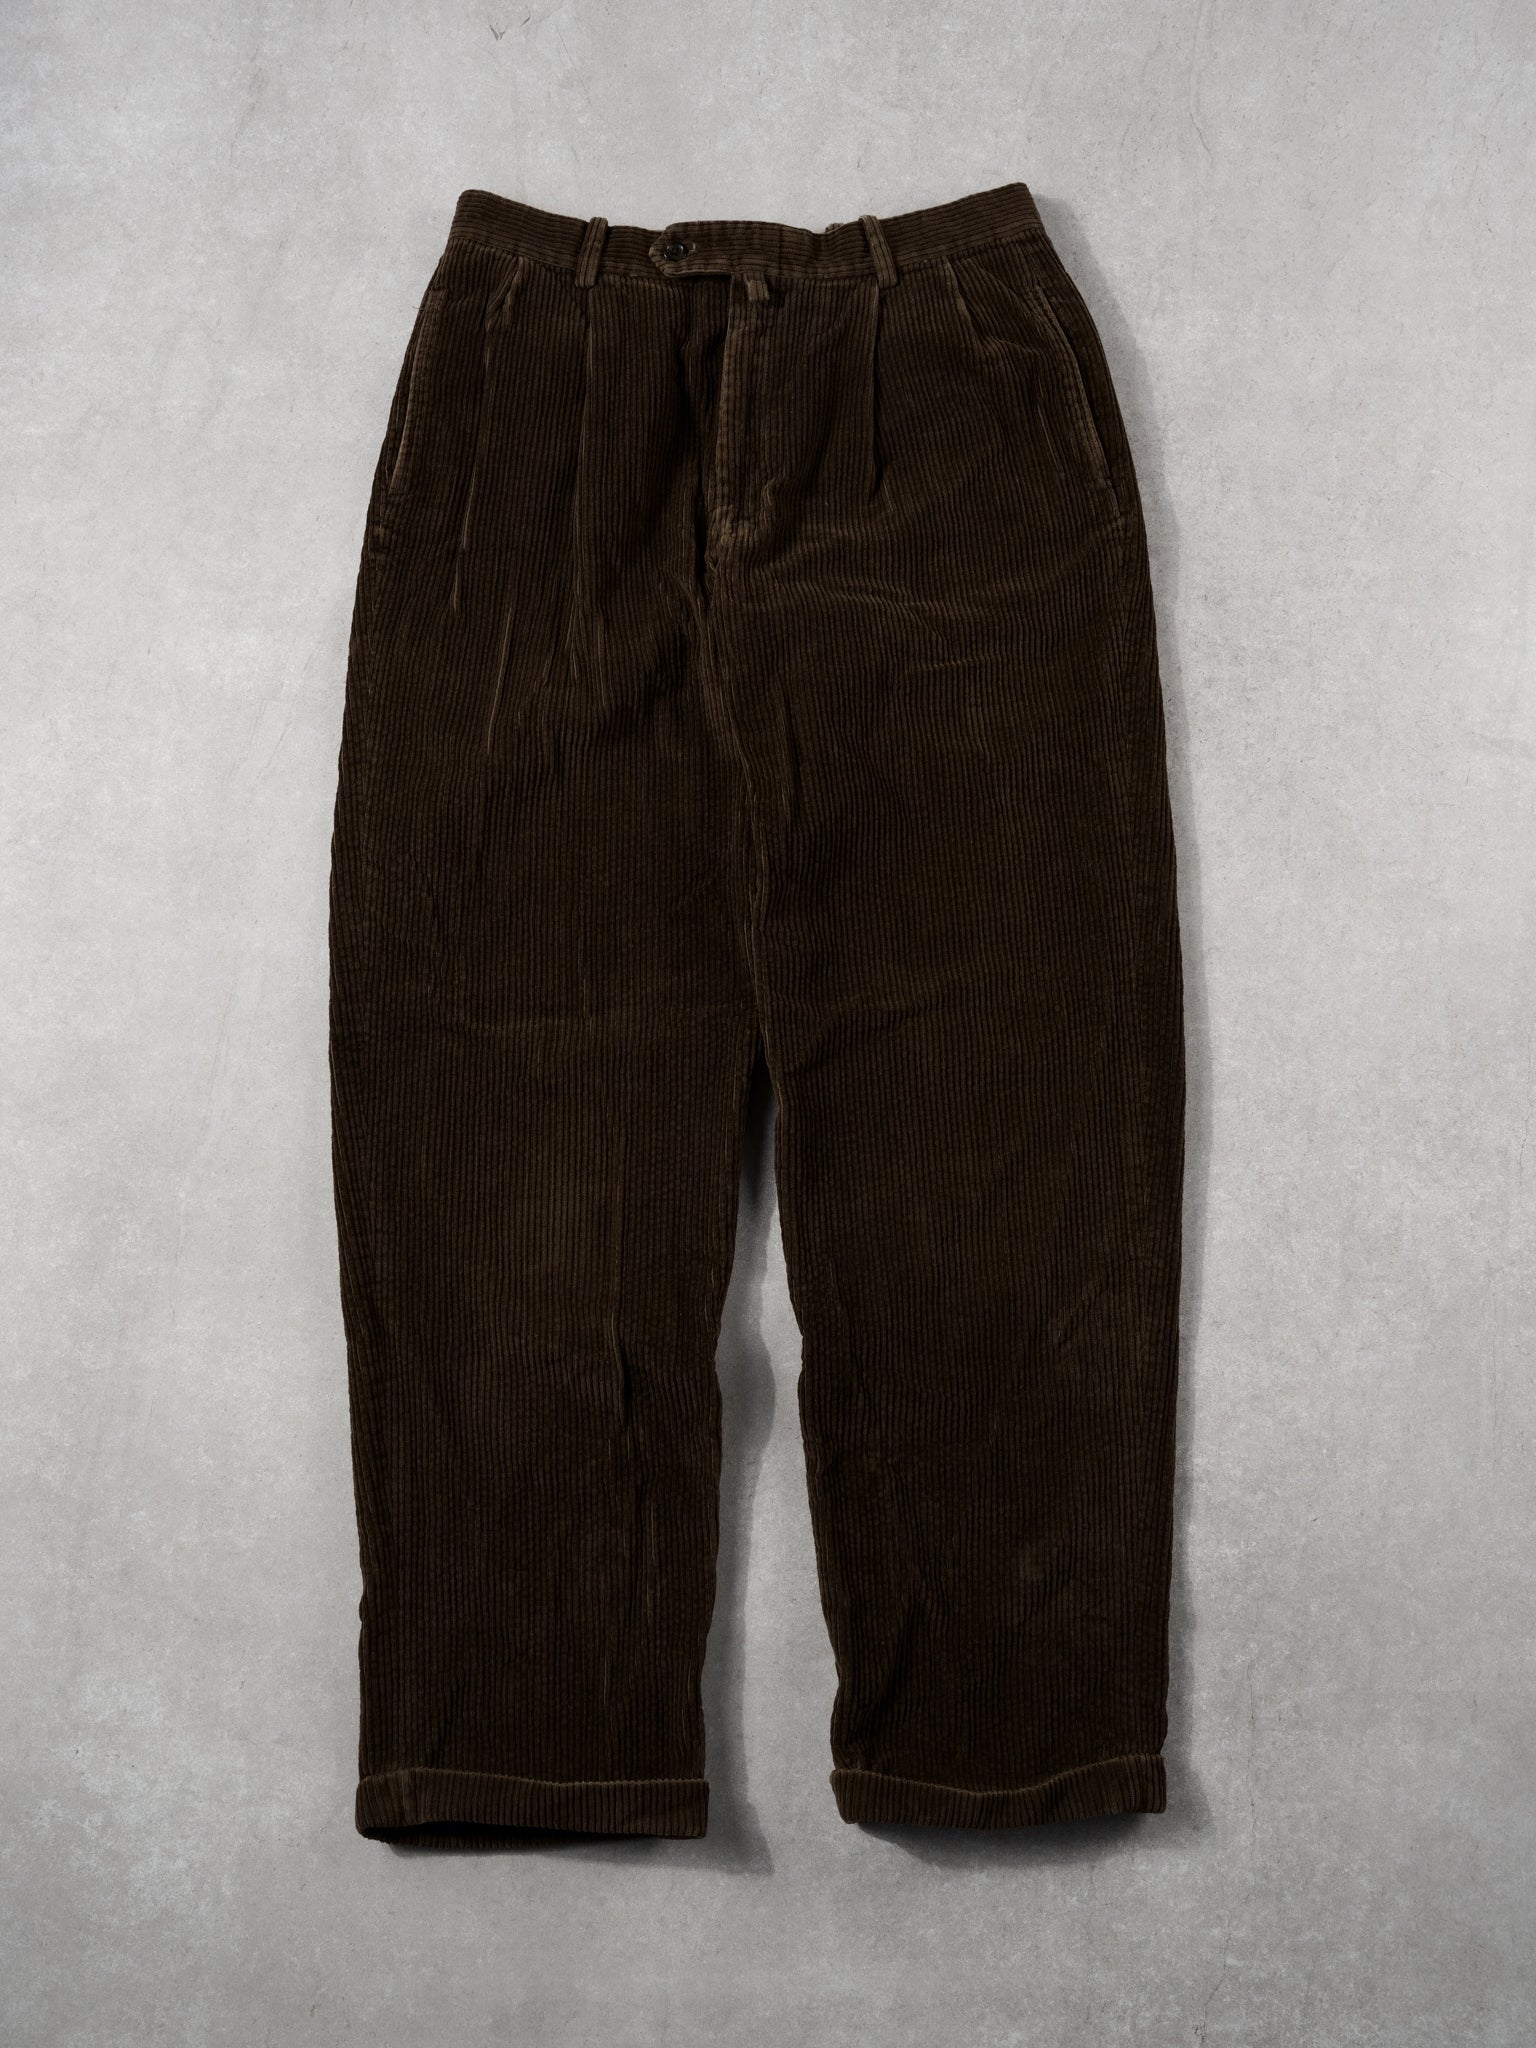 Vintage 70s Brown Tommy Hilfiger Corduroy Pants (30x31)